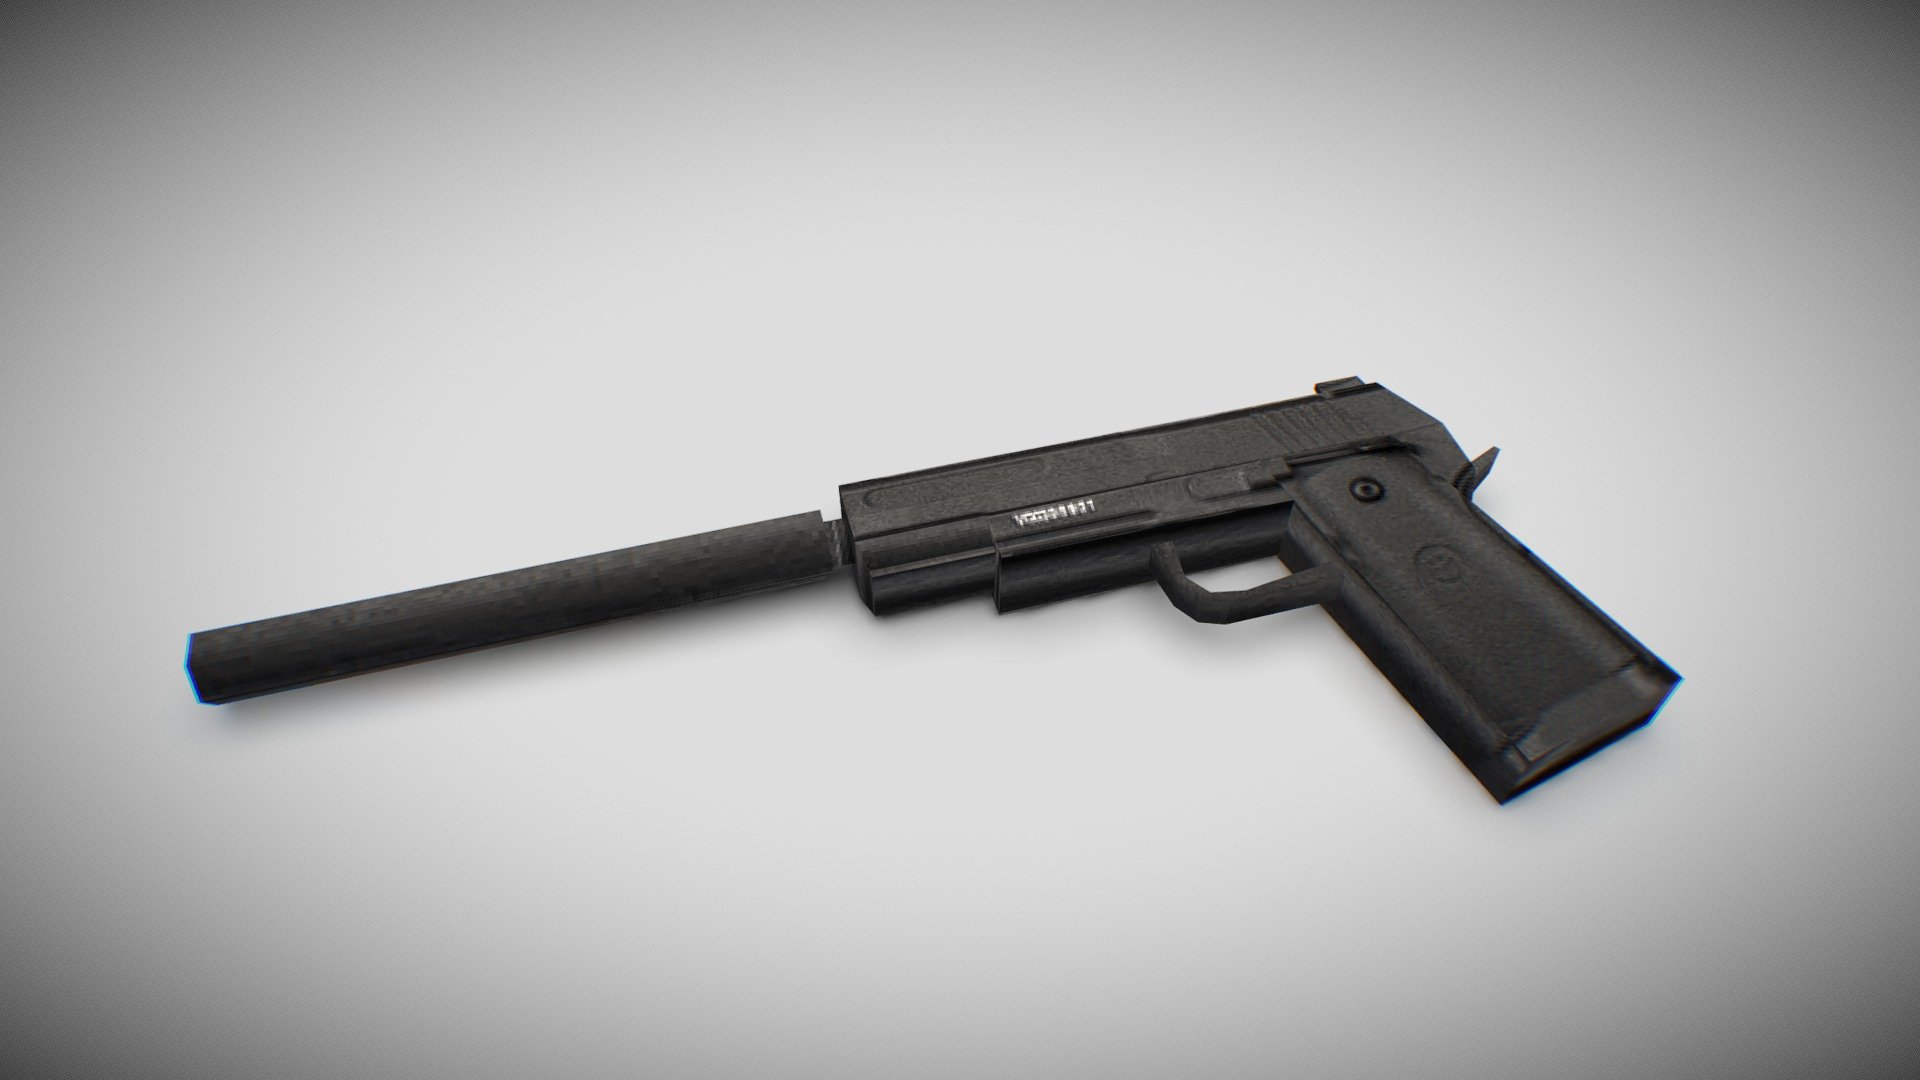 A ps1-style silenced 1911 pistol - 1911 Silenced - Download Free 3D model by J (@jIIll) 3d model